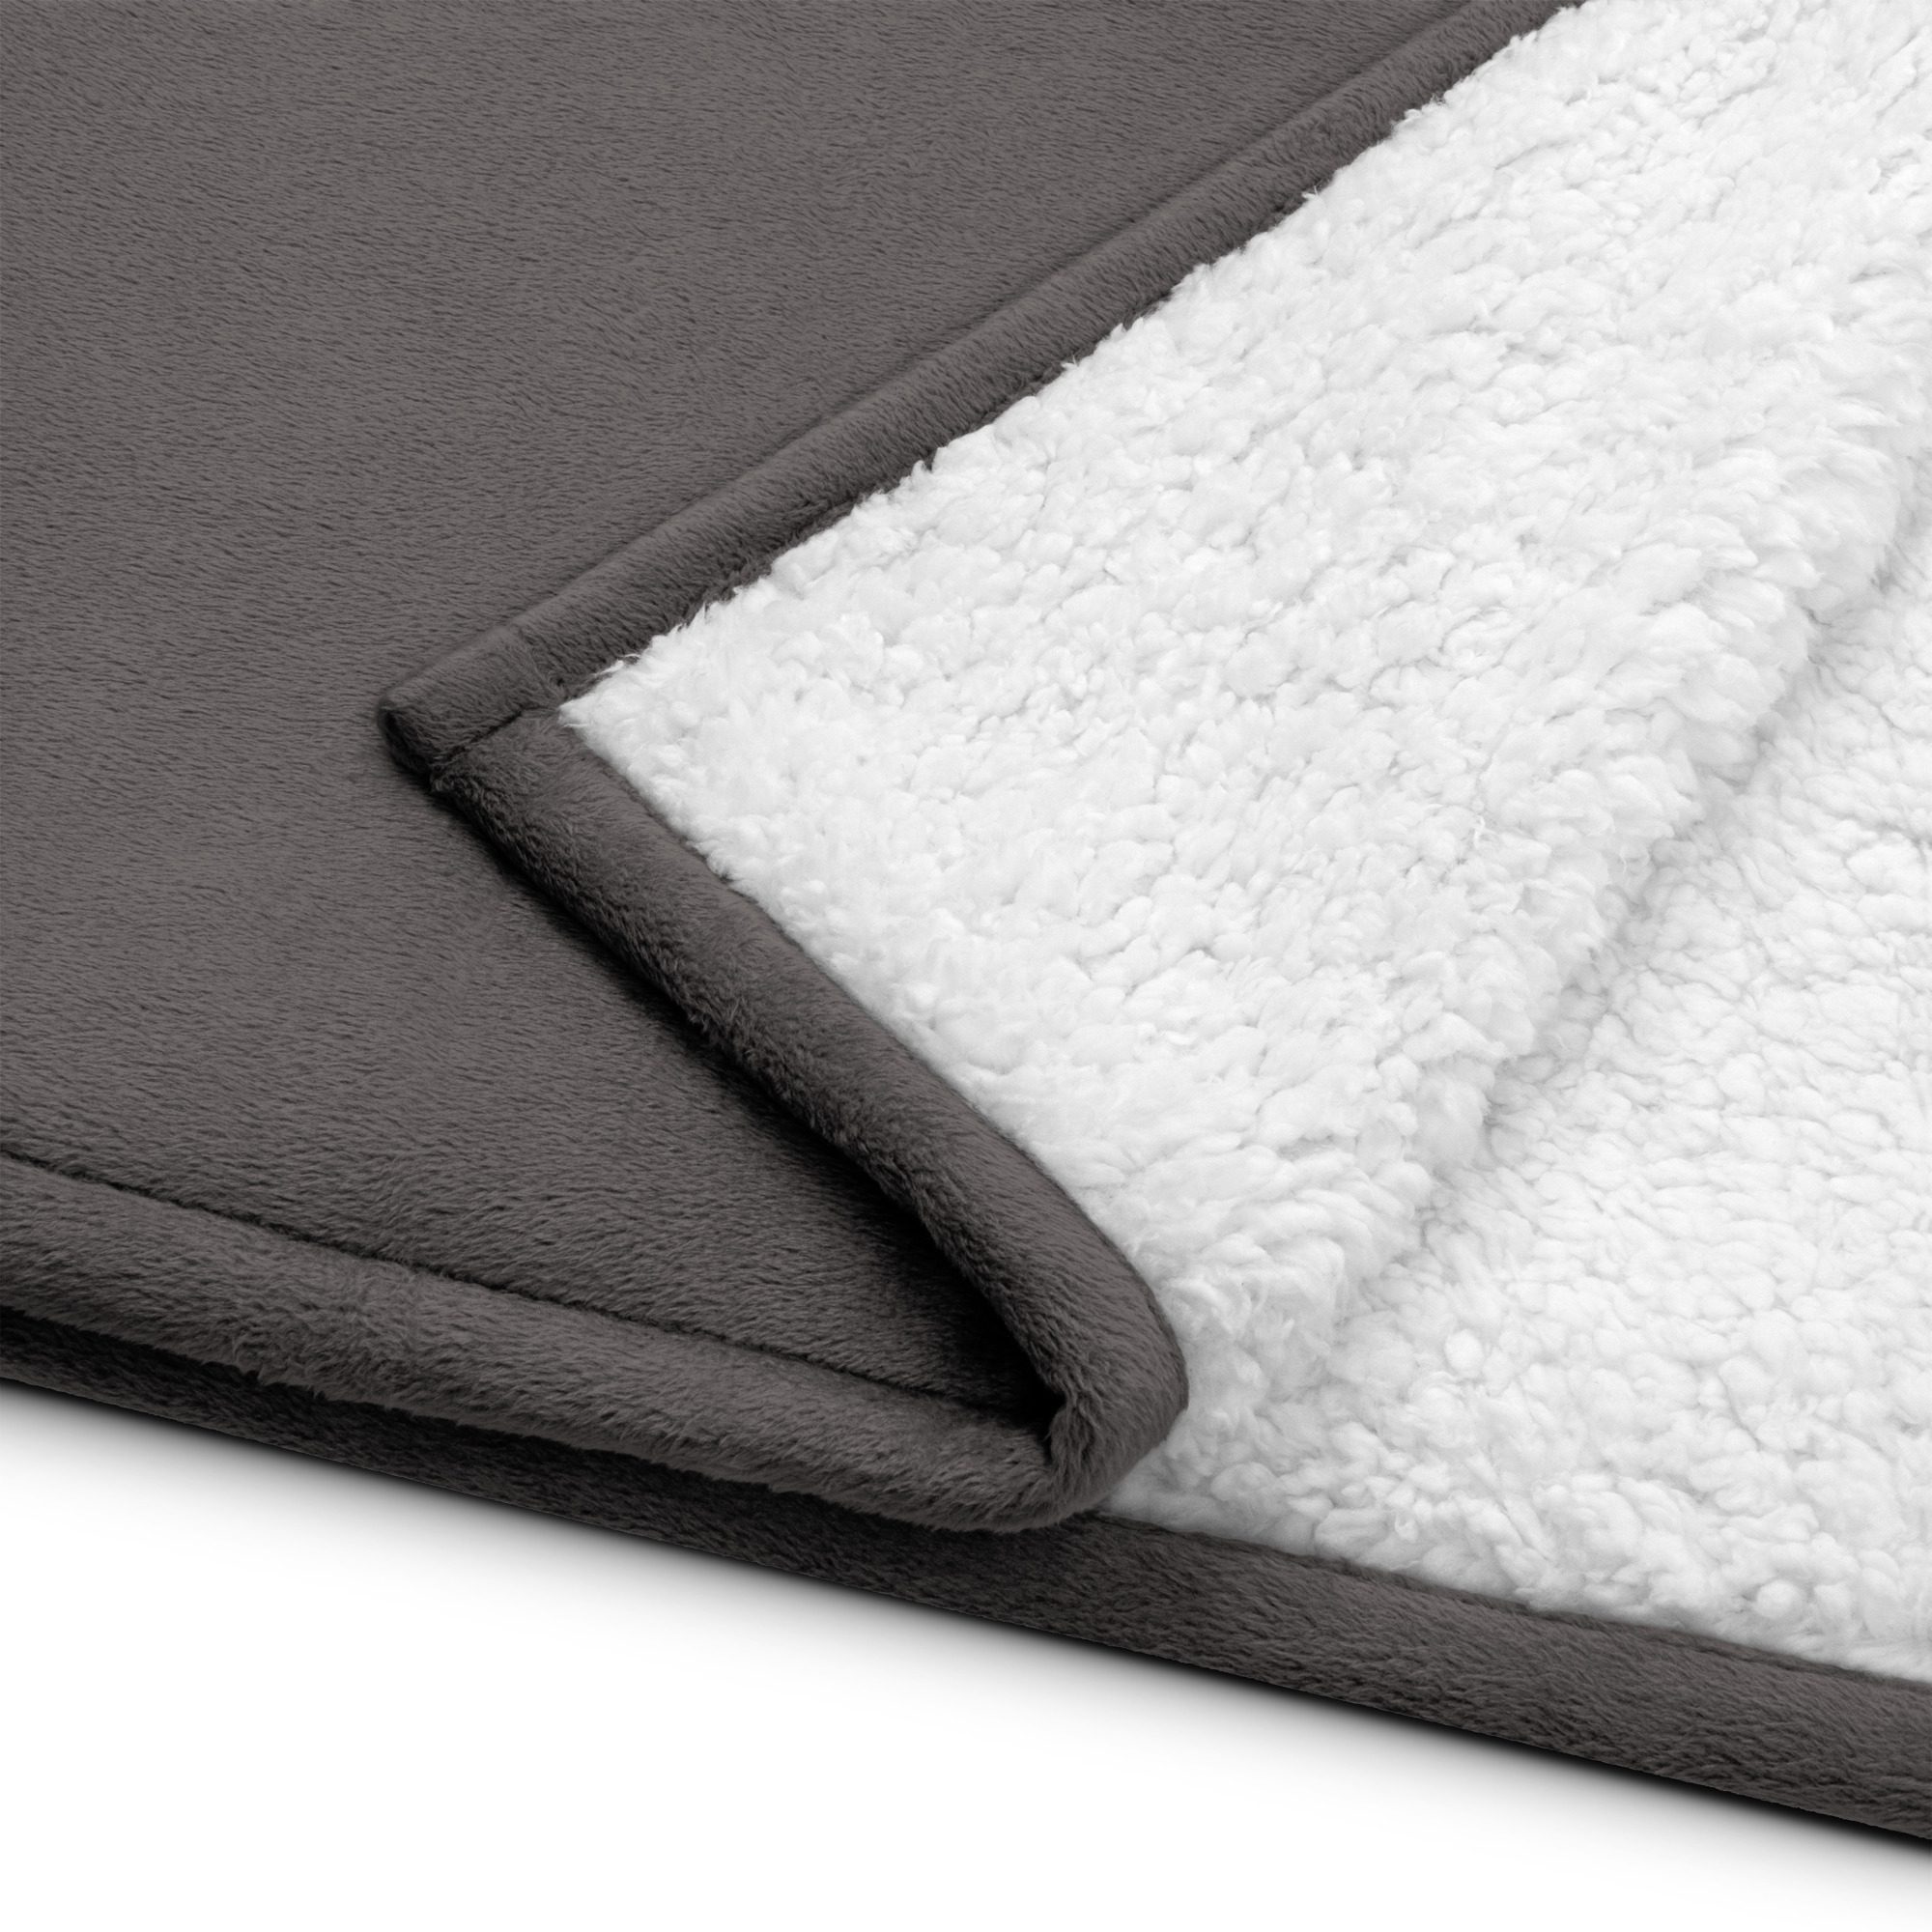 embroidered premium sherpa blanket heather grey product details 2 6526c33dda84b